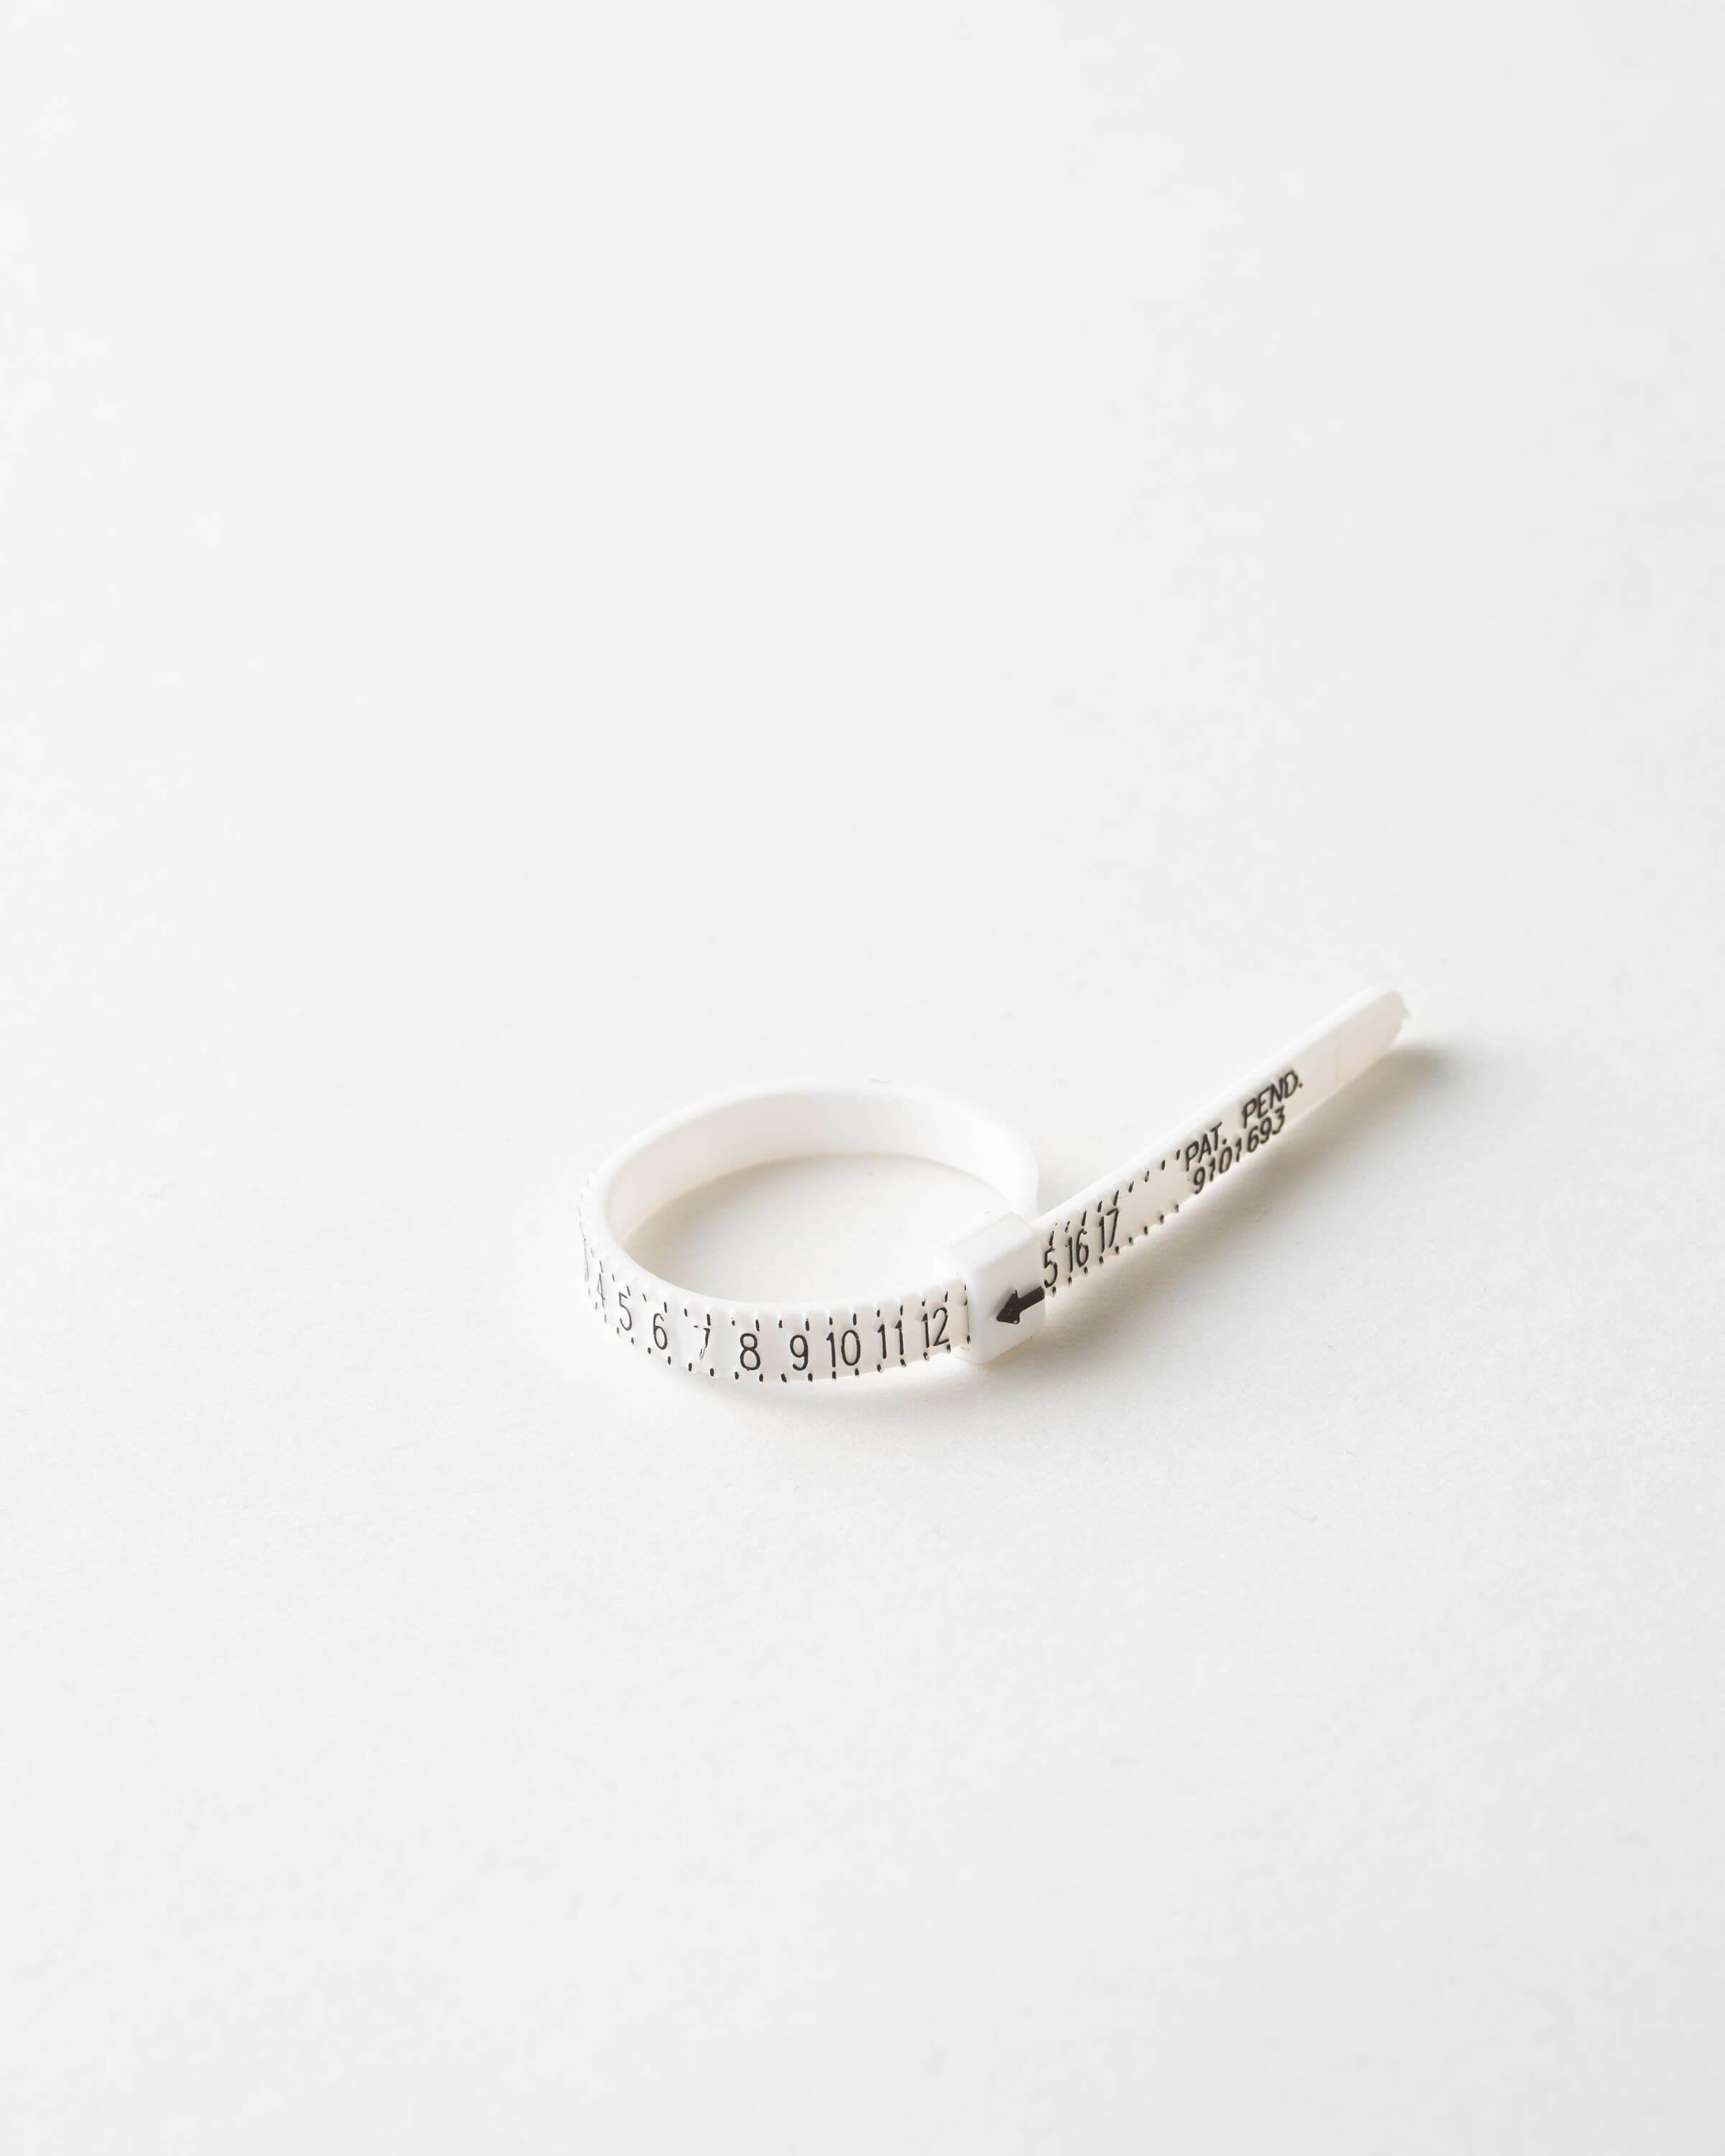 Ring Sizer – Emily Warden Designs